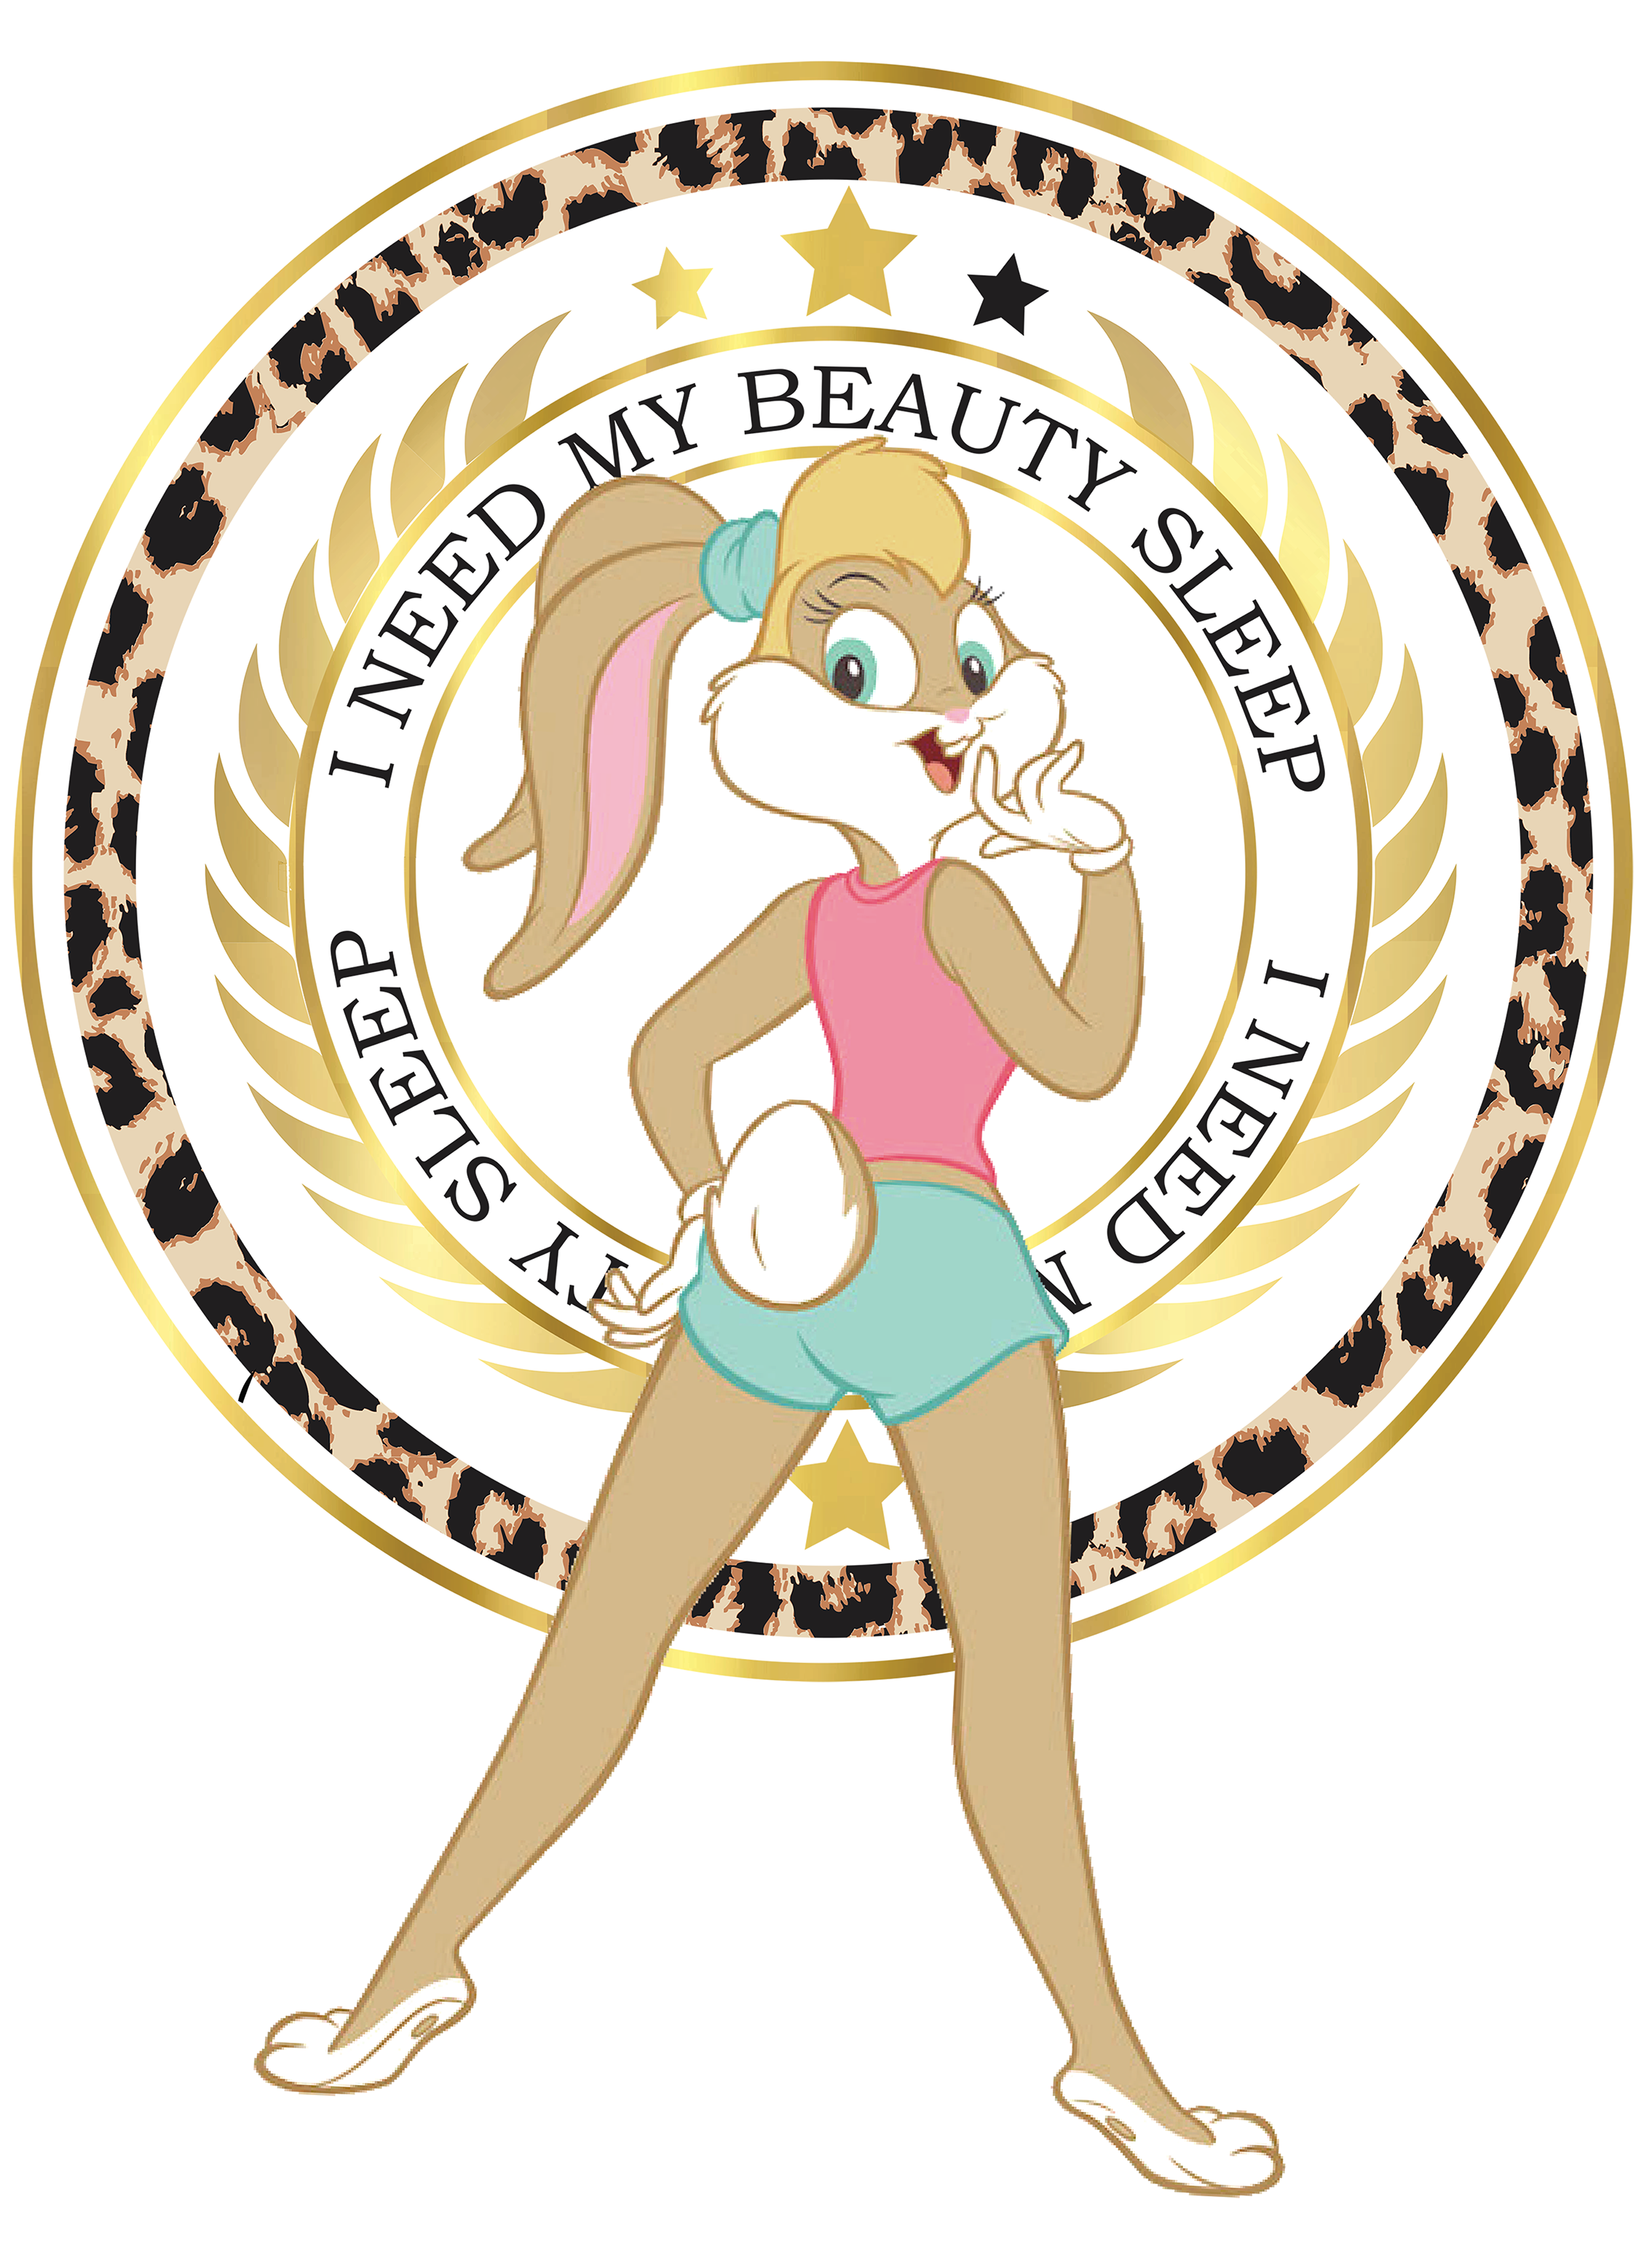 Looney Tunes Bunny Beauty Sleep Official Women's T-shirt ()